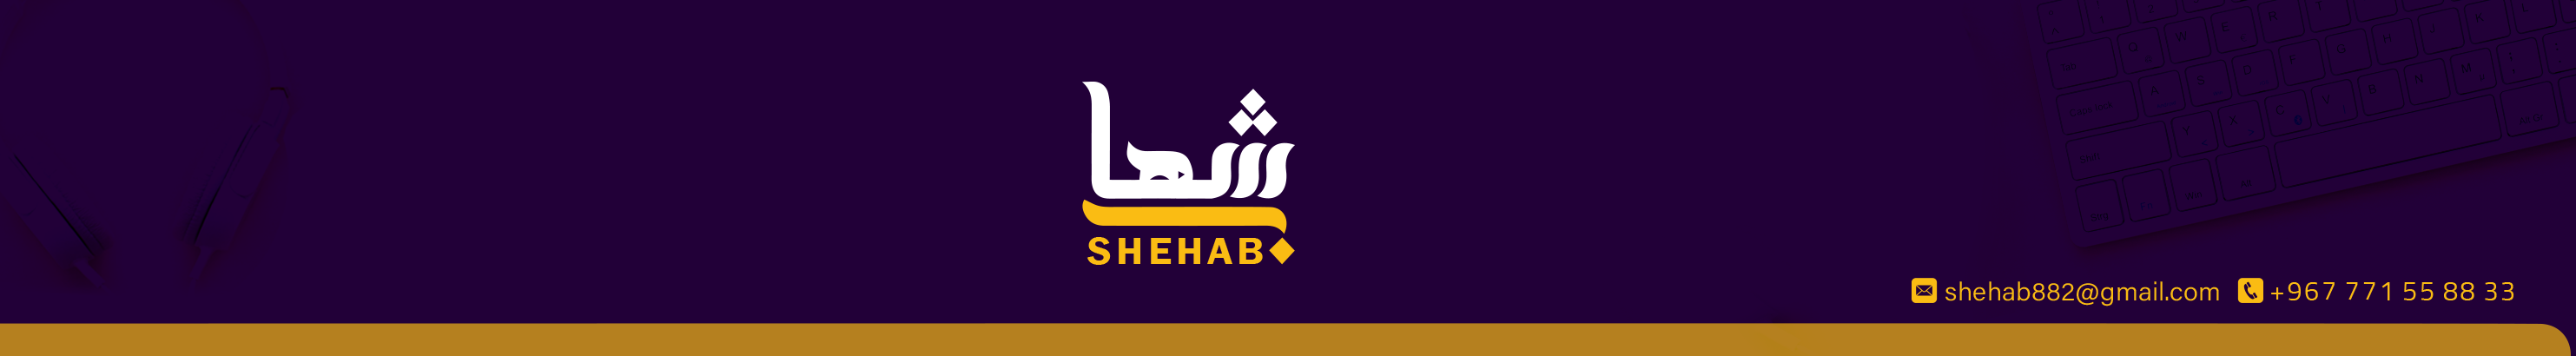 Profielbanner van shehab aljrash